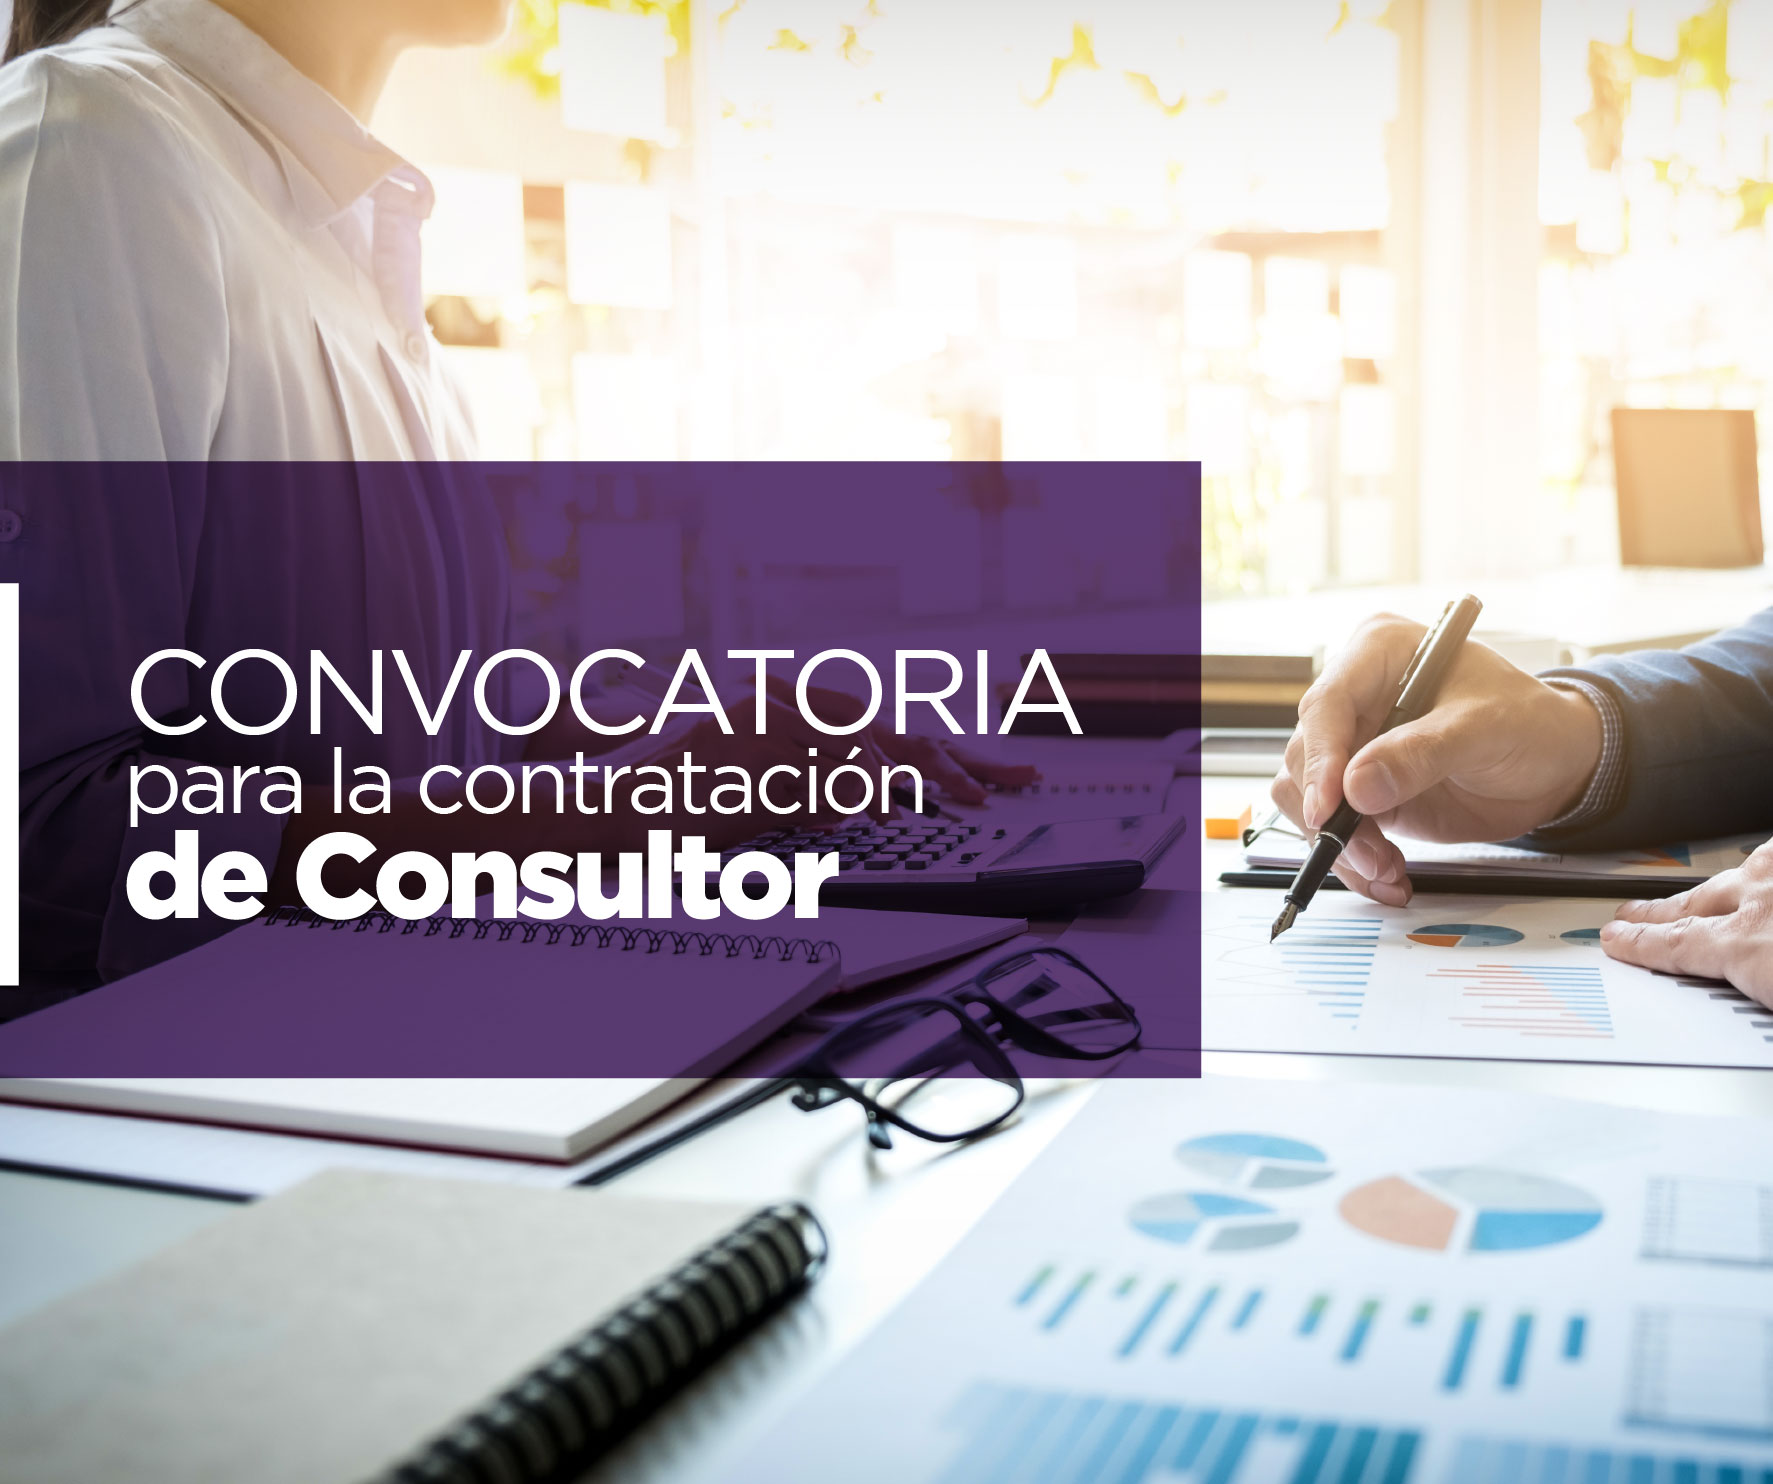 convocatoria_consultoria_conafips_14-7-2021